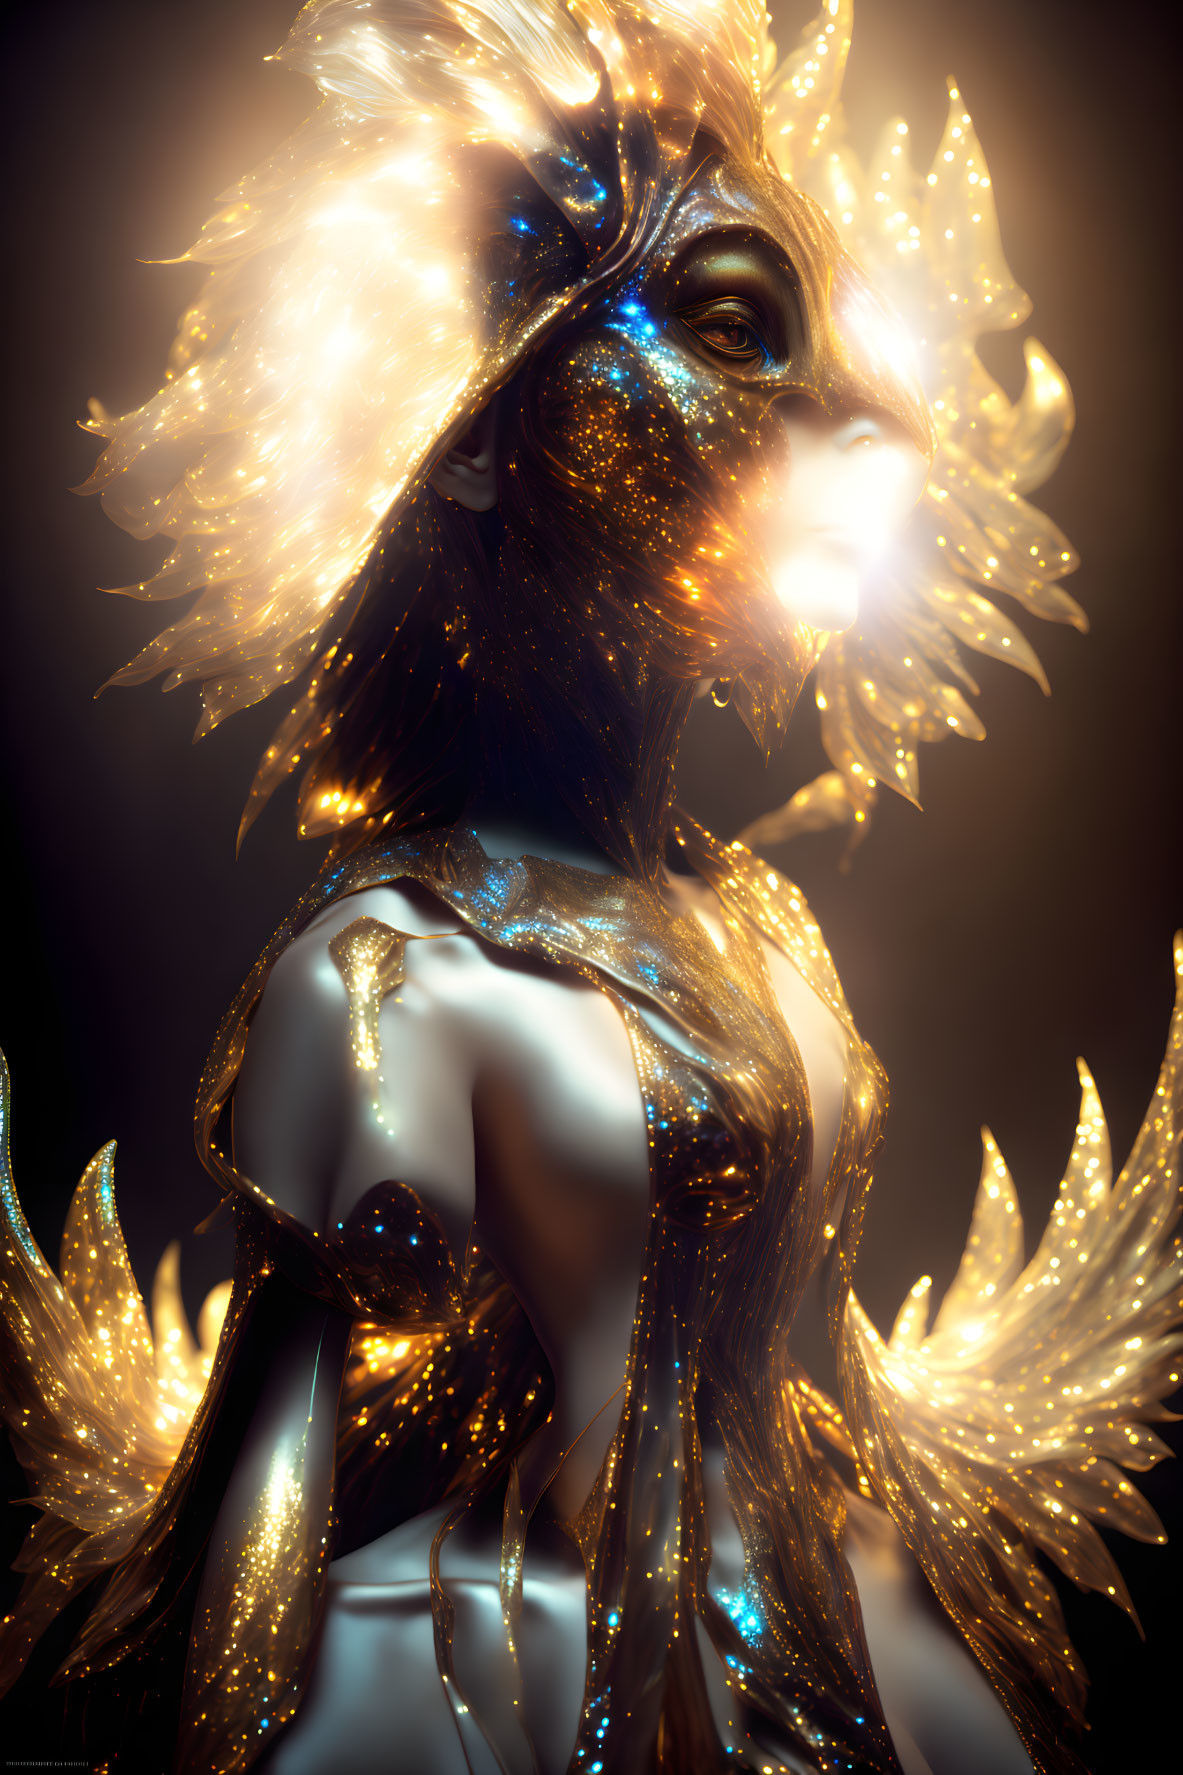 Shimmering figure with golden leaf adornments on dark background